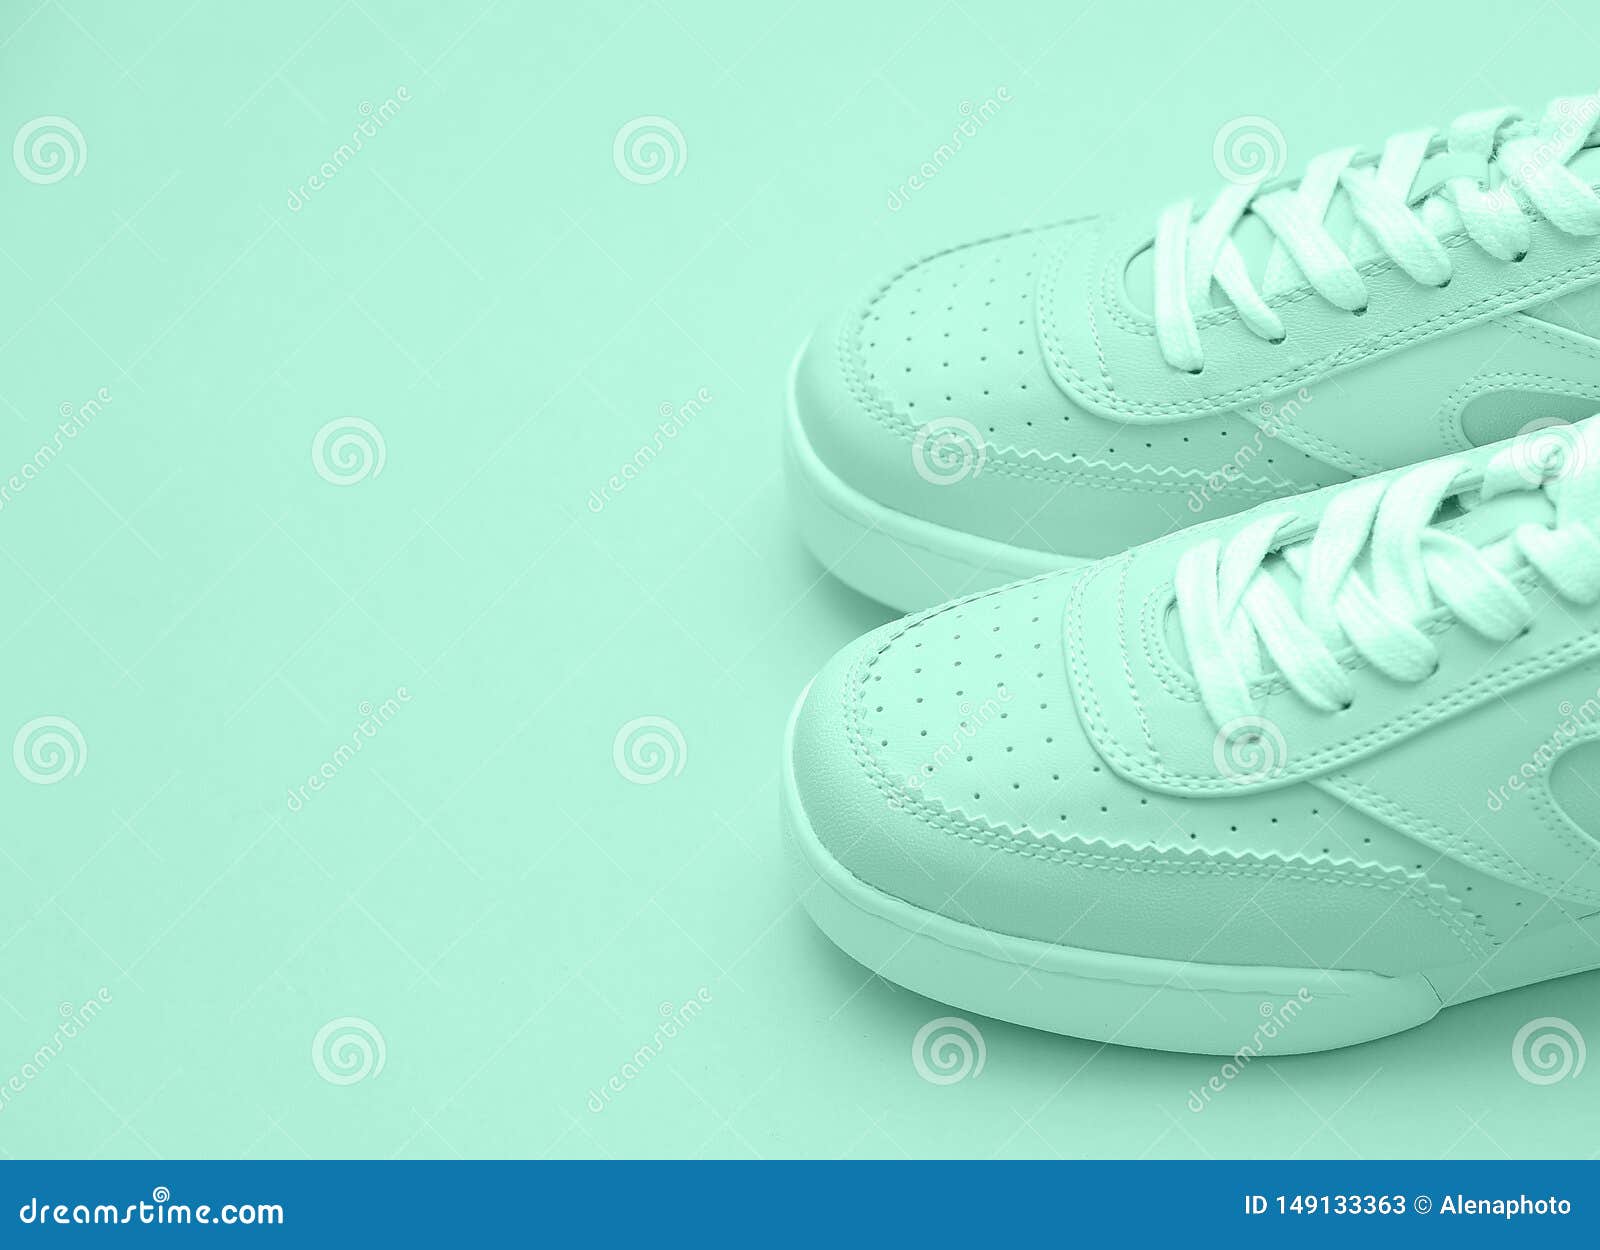 Stylish Green Shoes on Colorful Background. Stock Image - Image of ...